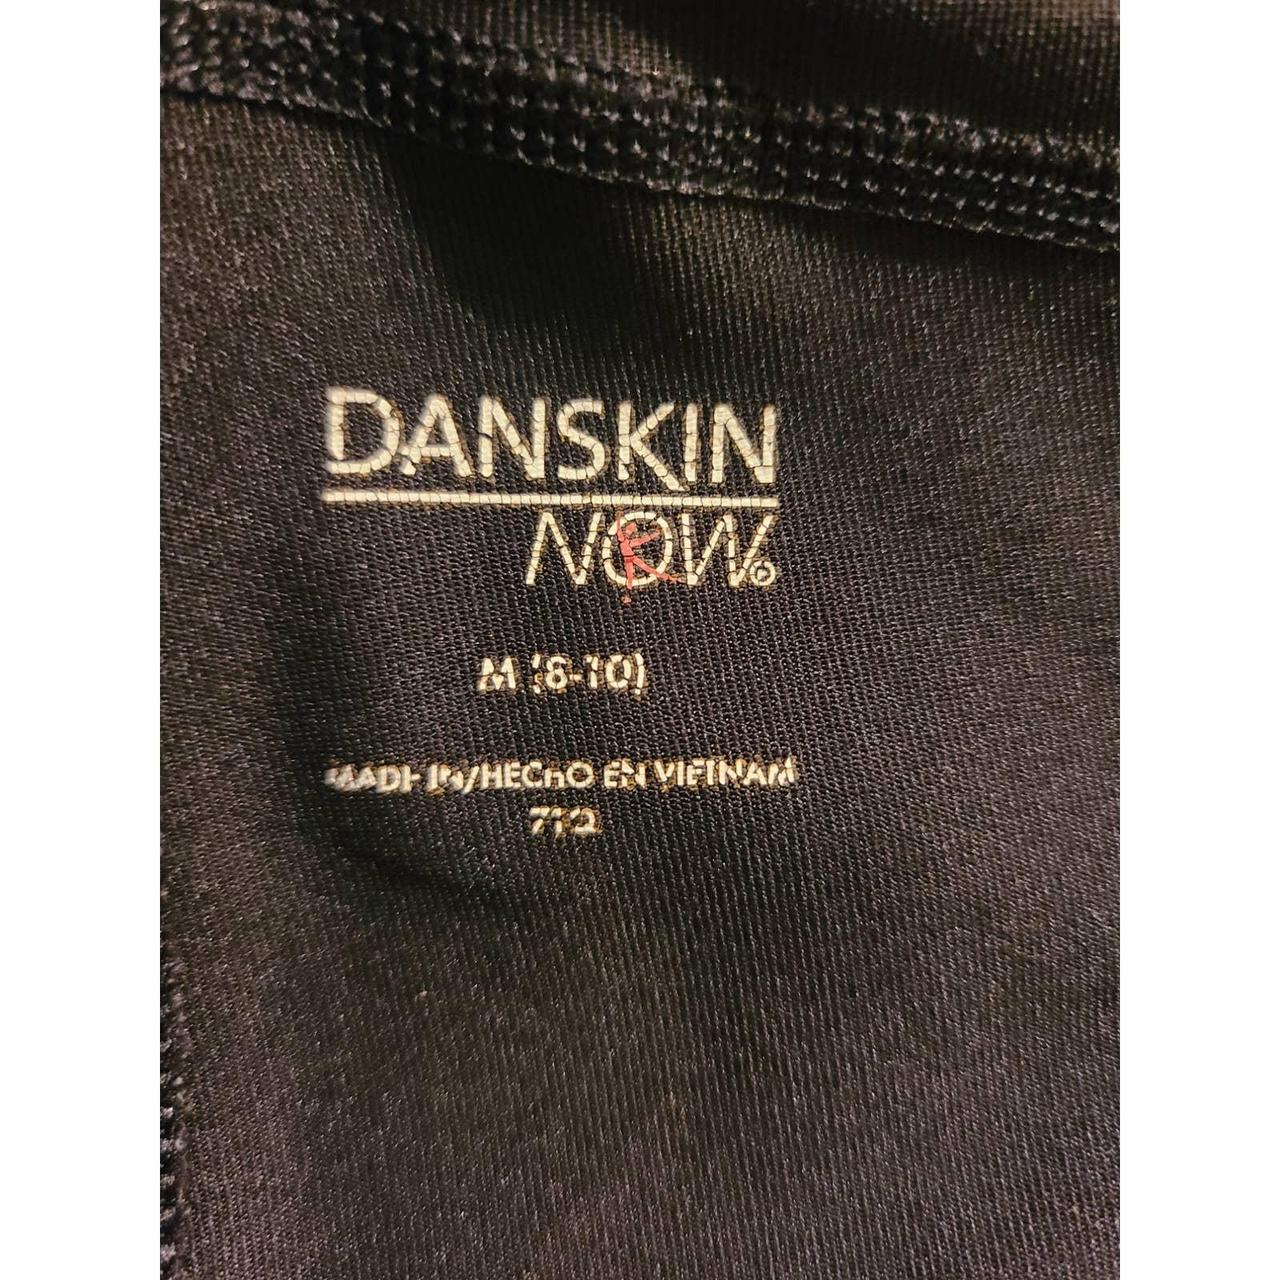 Danskin now medium 8-10 womens capri - Depop